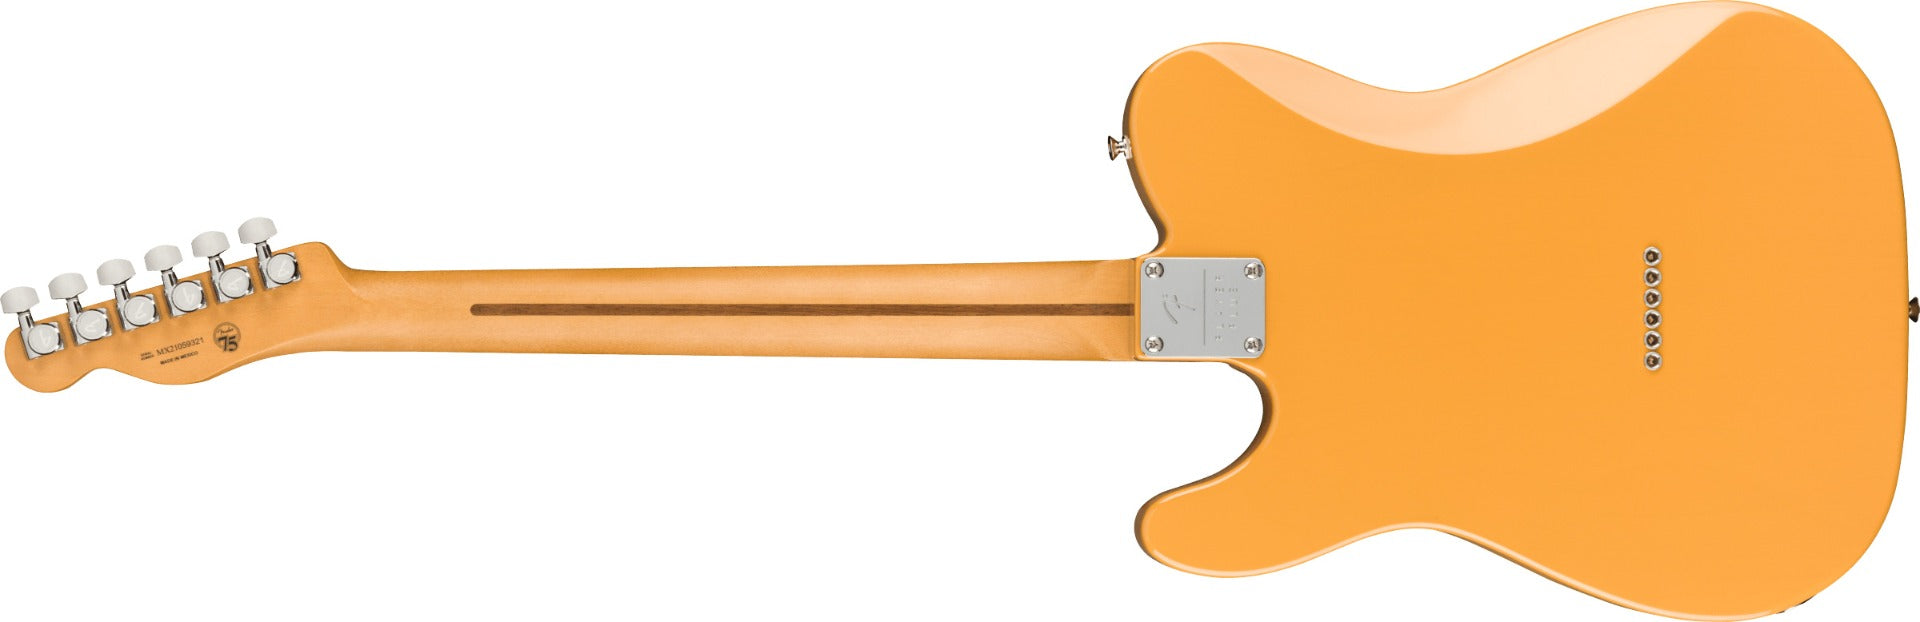 Fender Player Plus Nashville Telecaster - Maple, Butterscotch Blonde rear